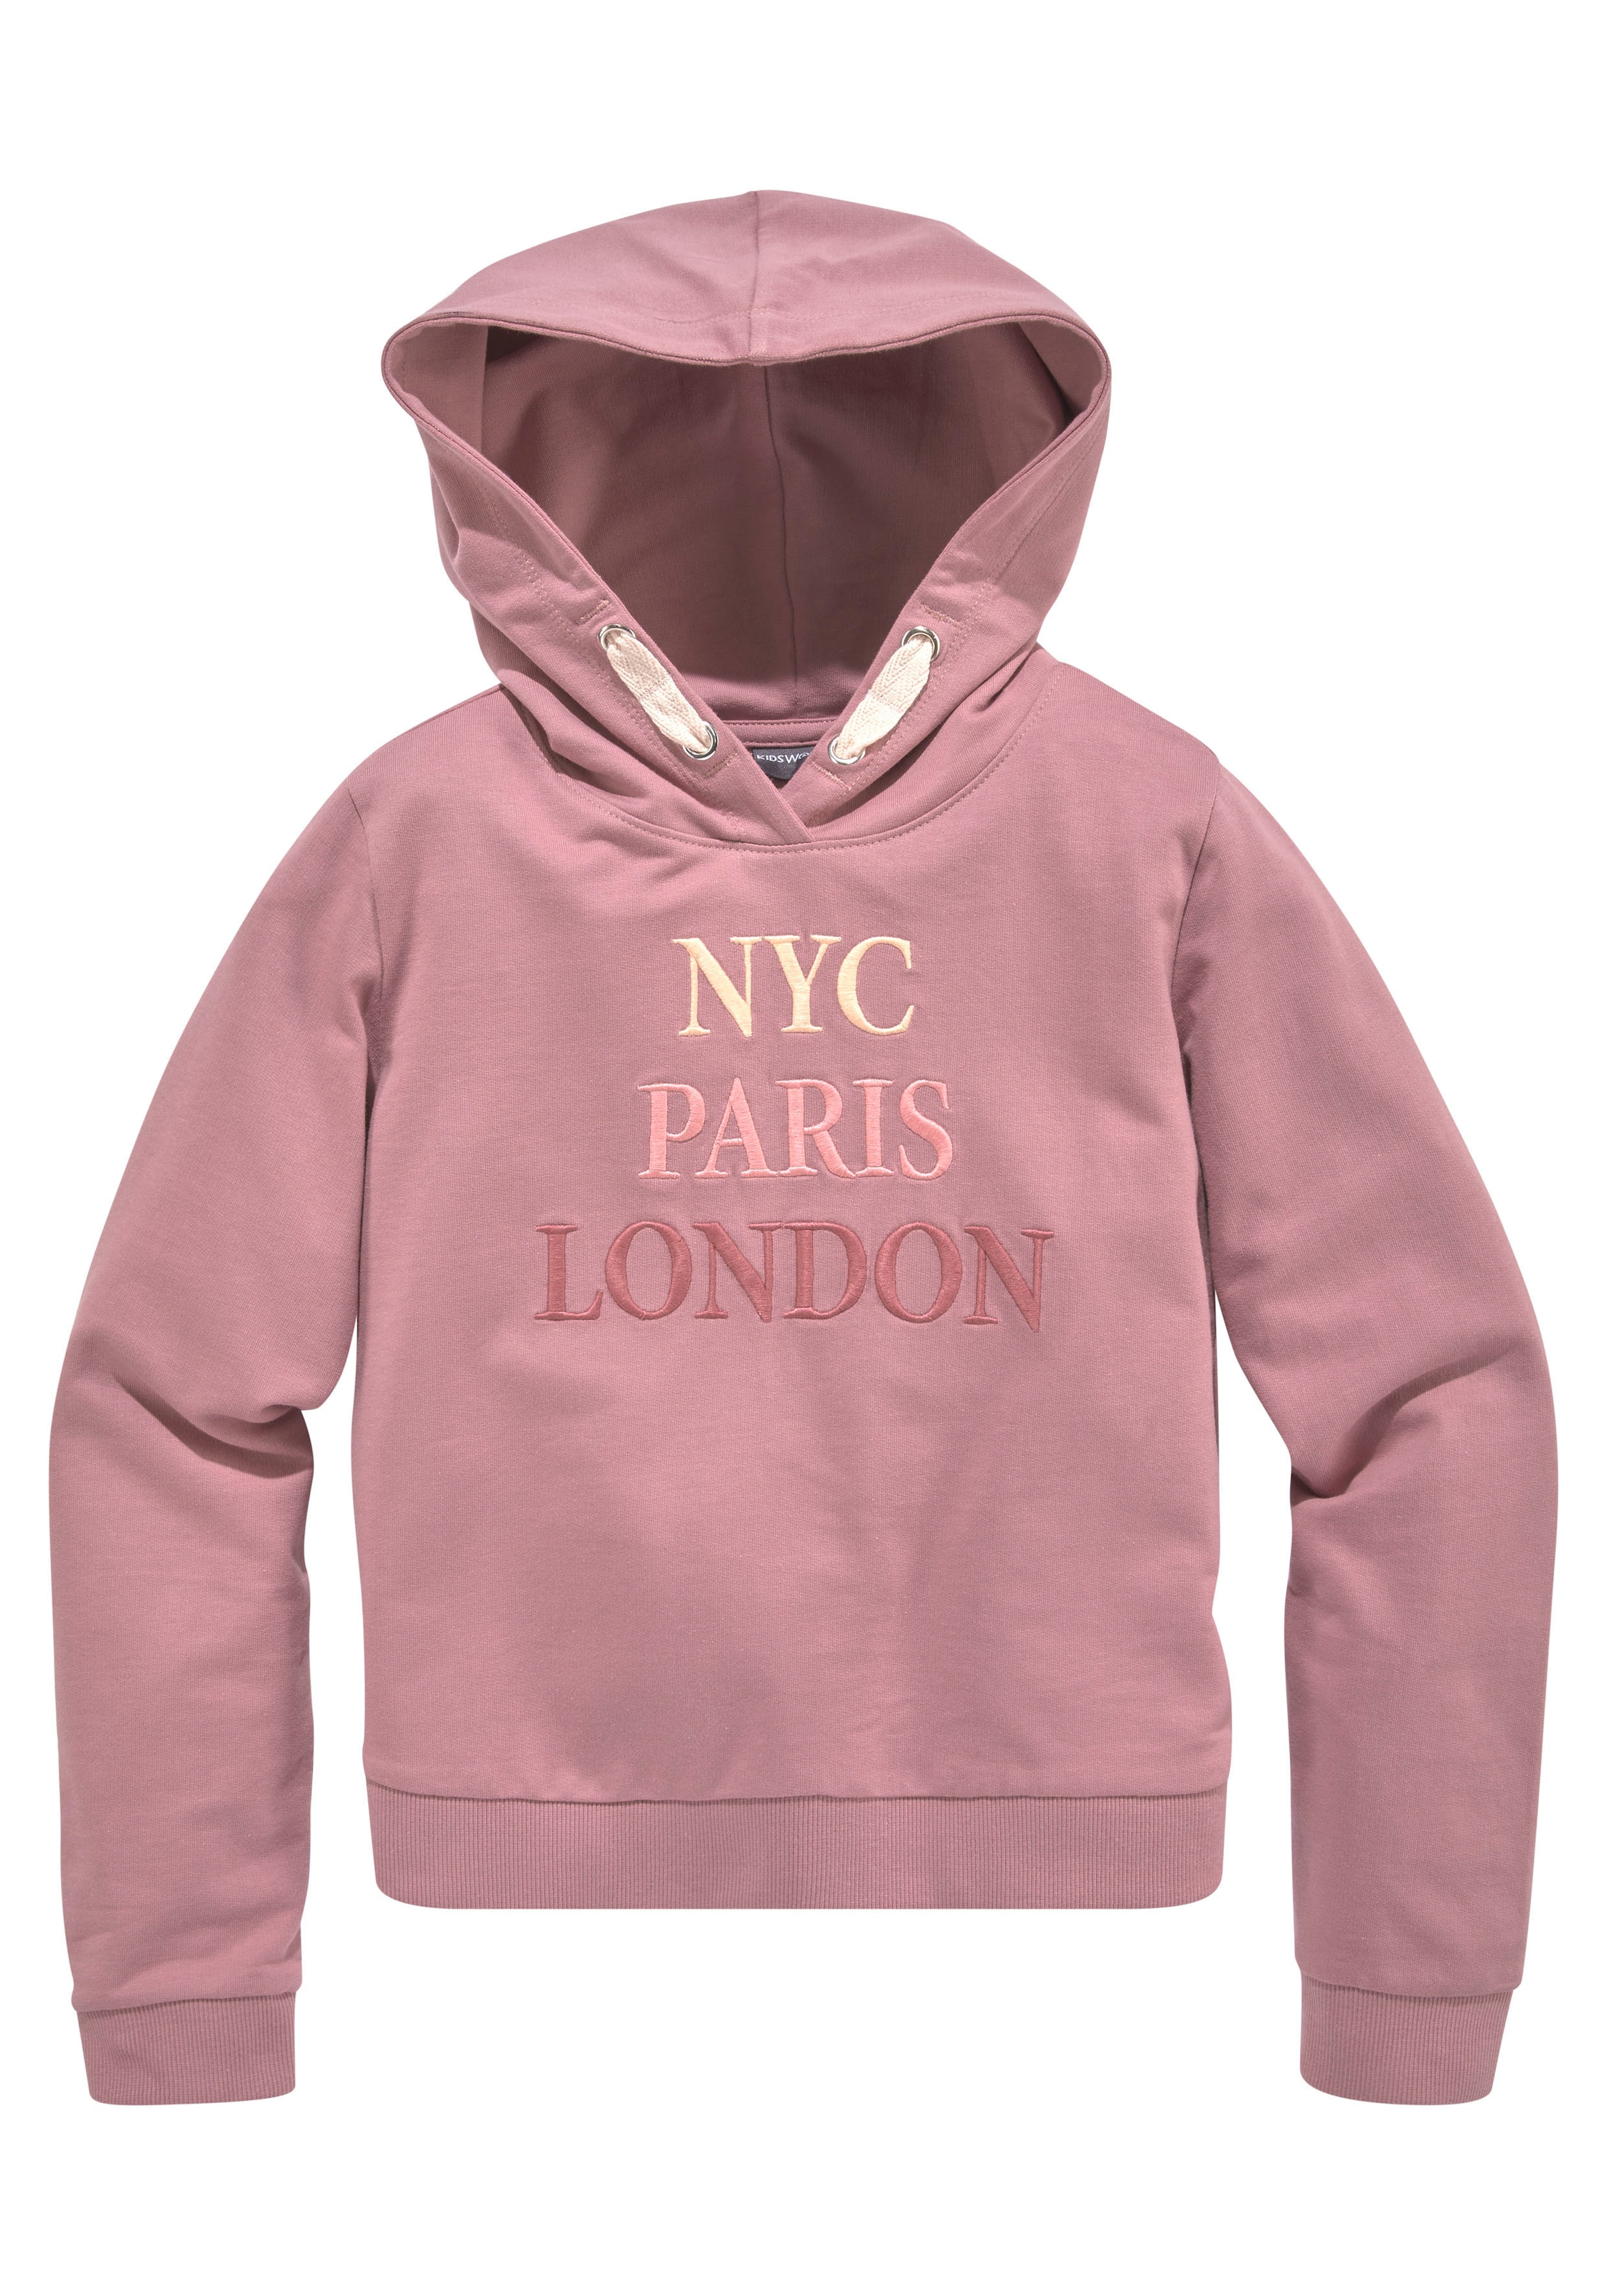 Kapuzensweatshirt Stickerei mit London«, bei ♕ Paris KIDSWORLD »NYC